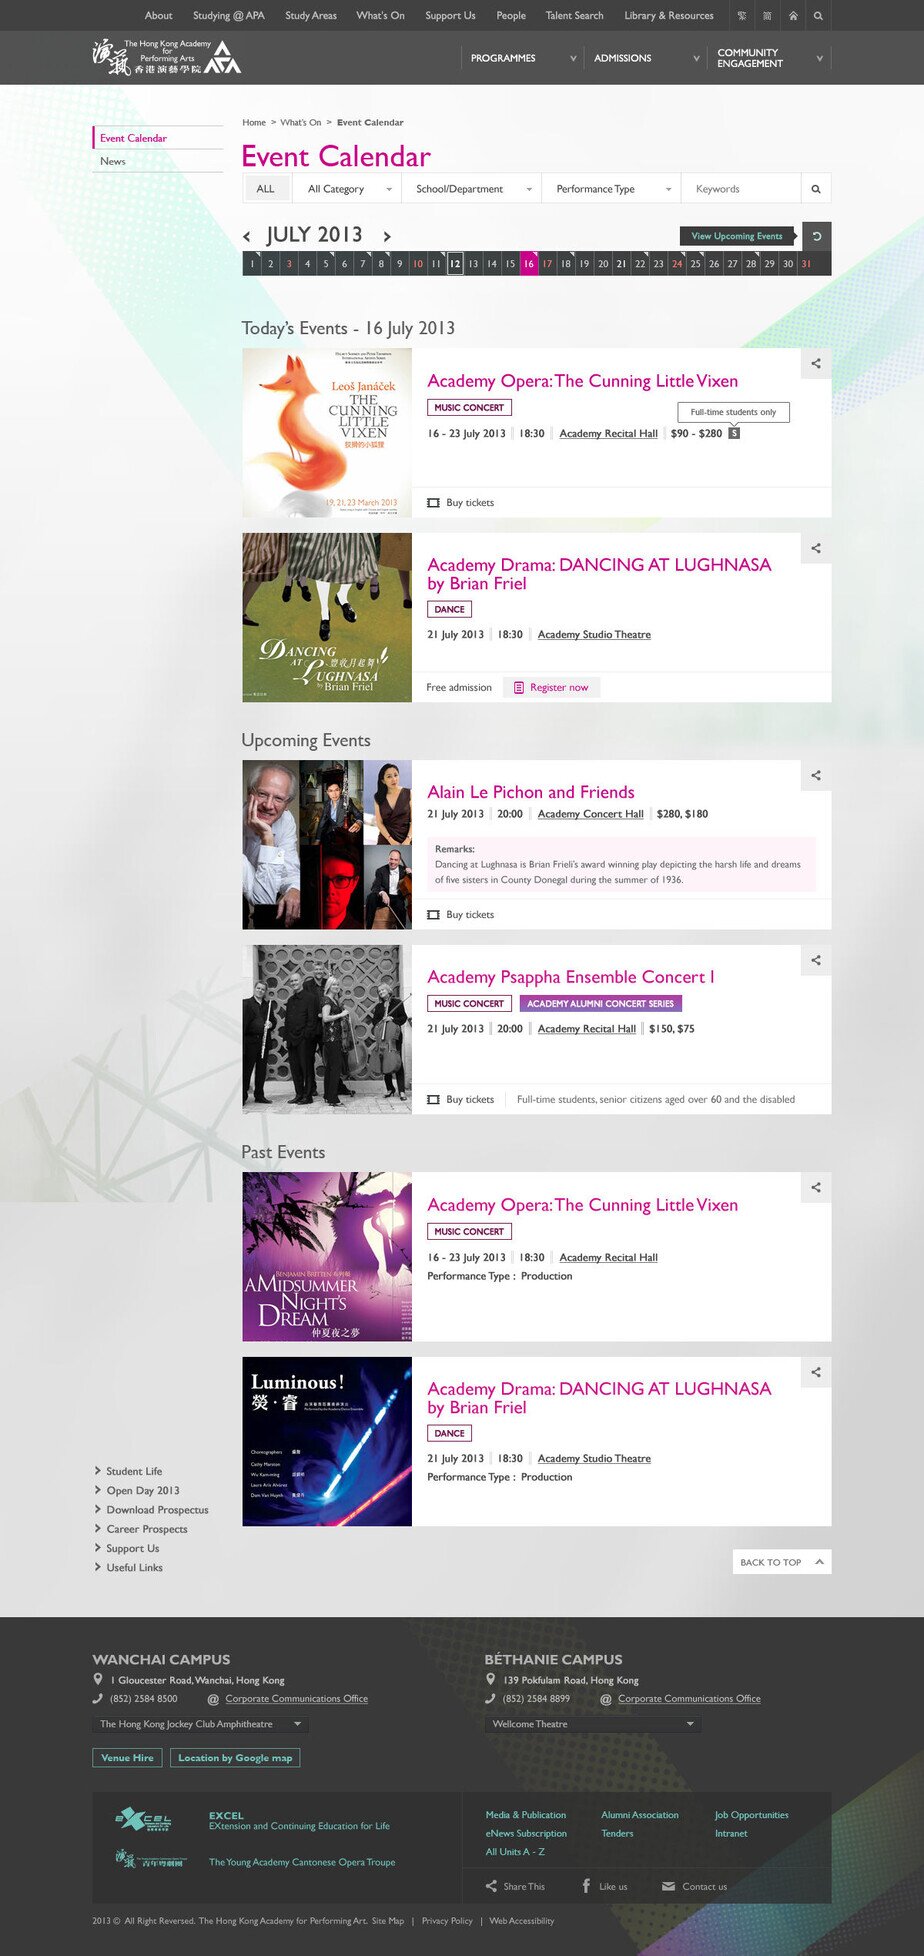 Hong Kong Academy for Performing Arts website screenshot for desktop version 7 of 10